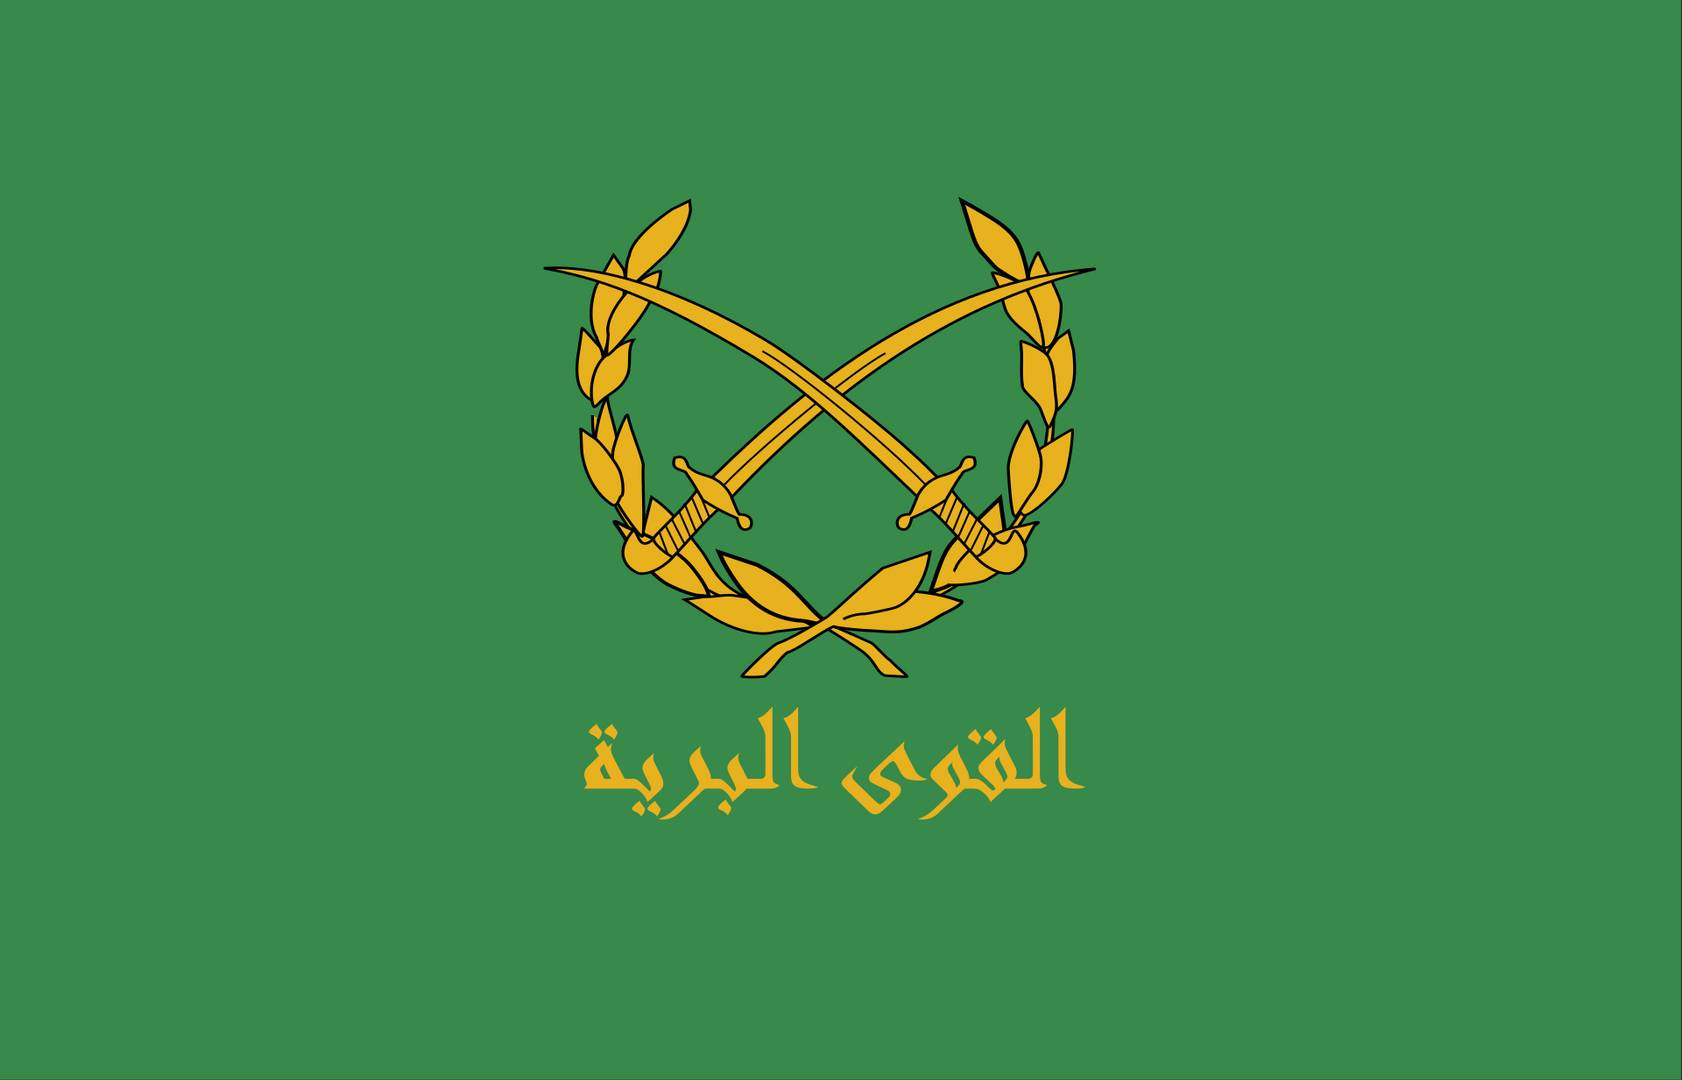 Флаг Сирийской Арабской Армии